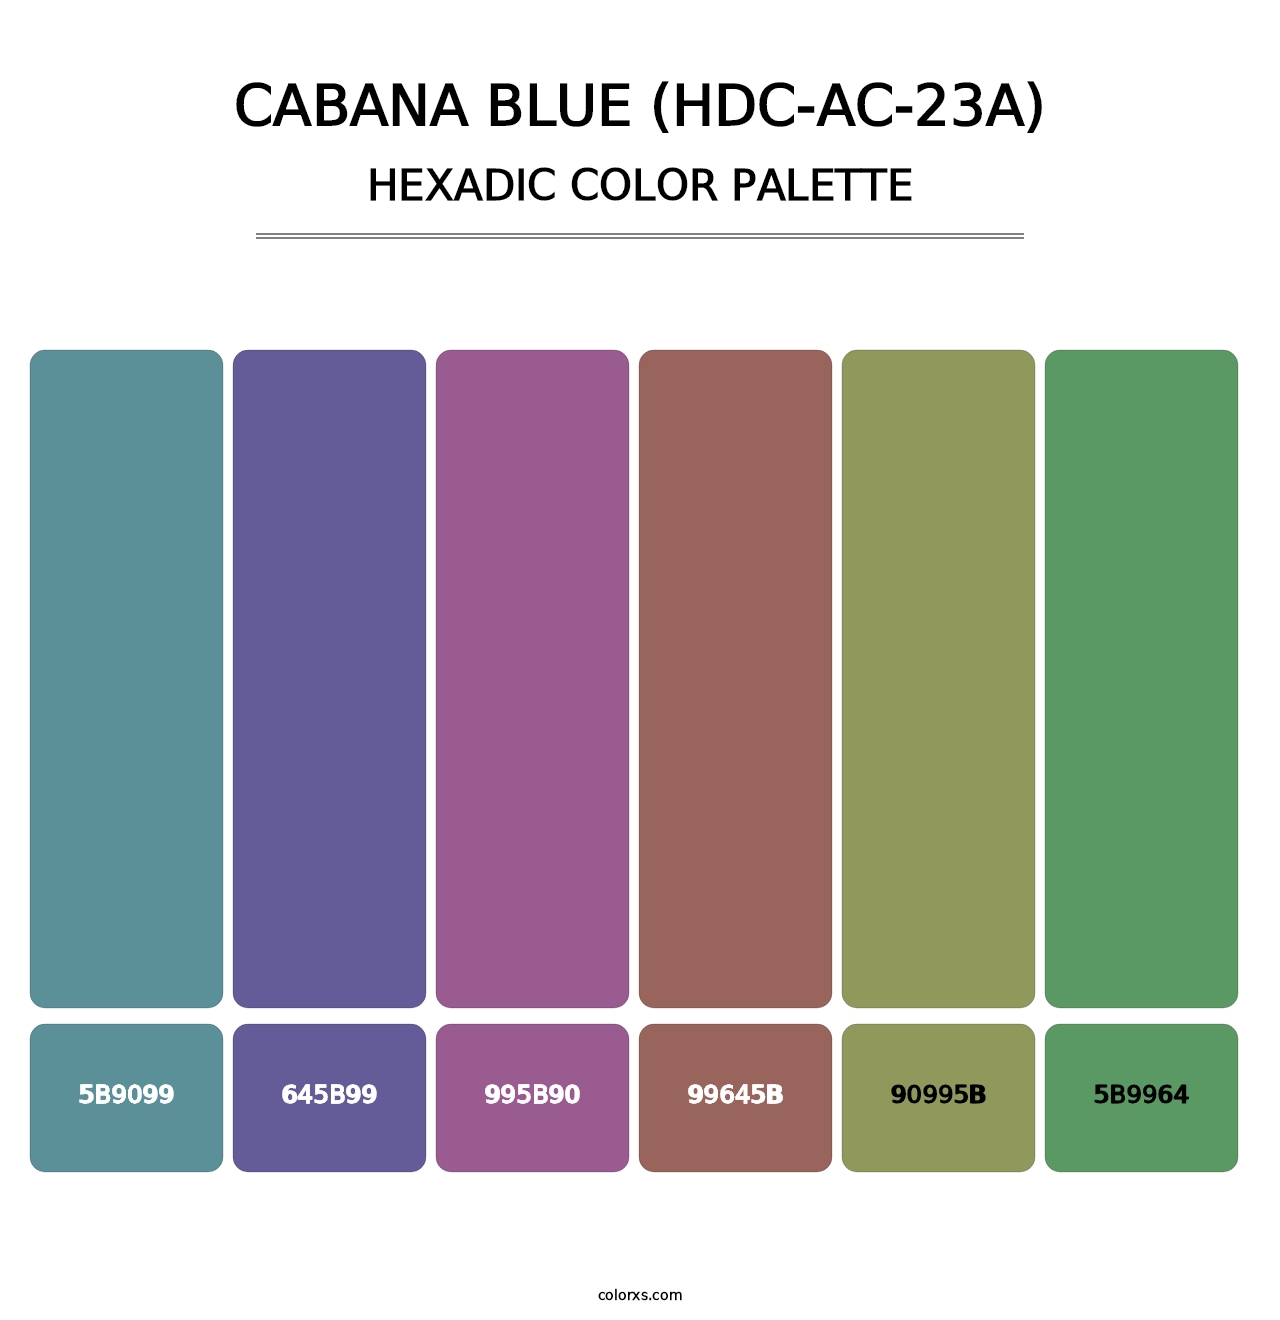 Cabana Blue (HDC-AC-23A) - Hexadic Color Palette